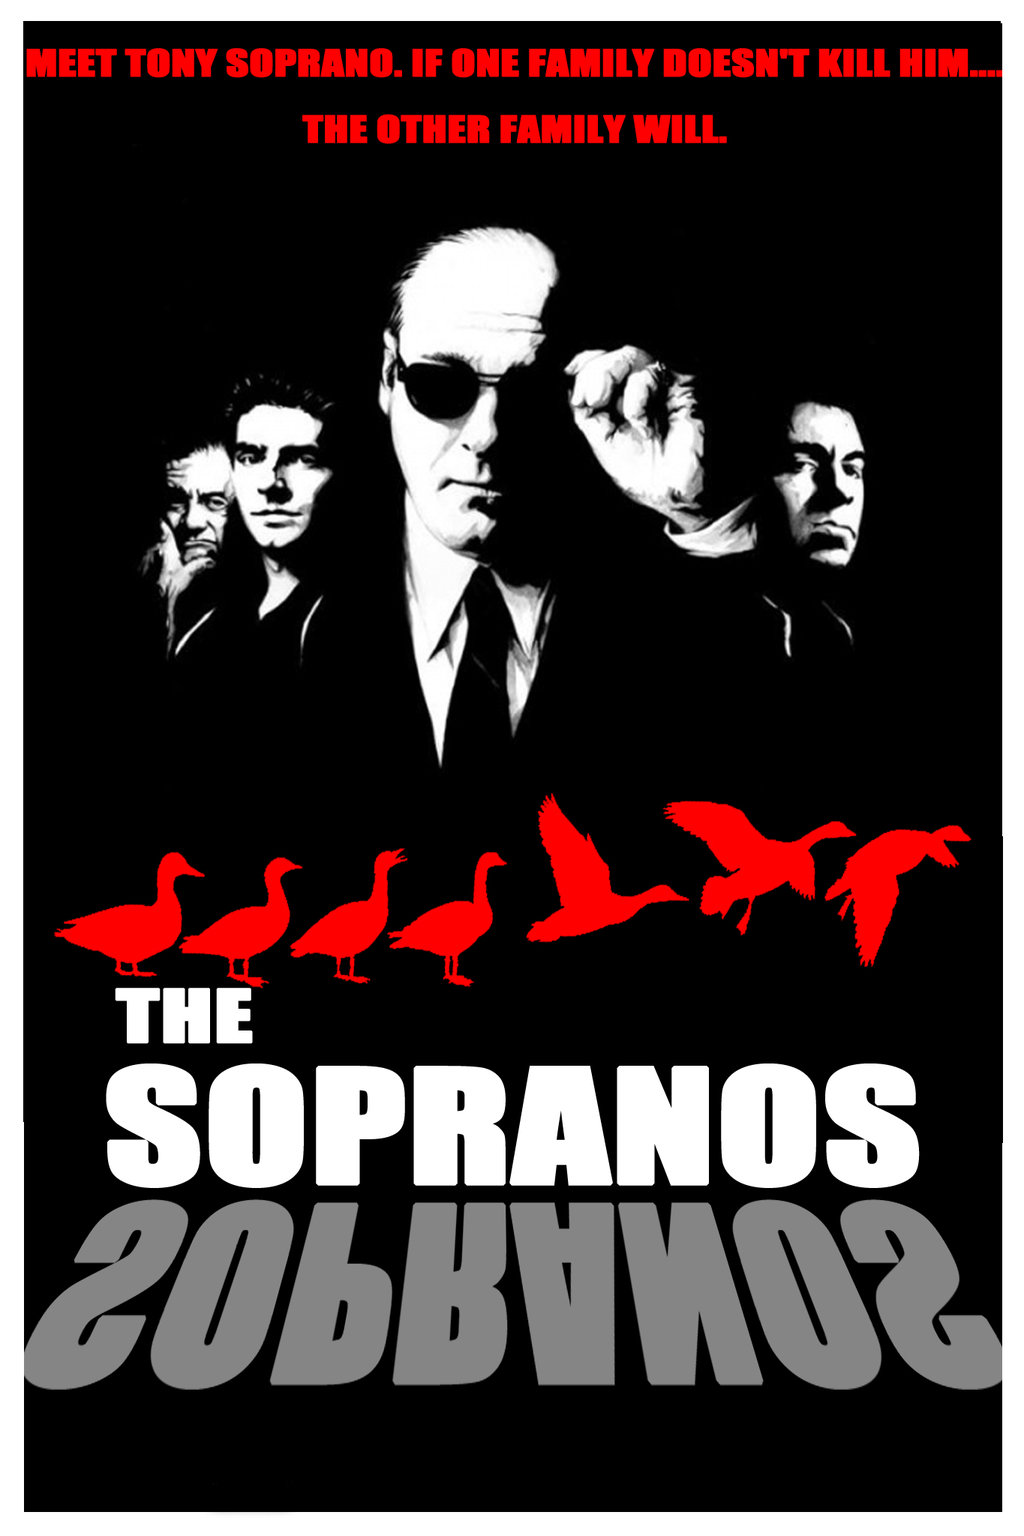 The Sopranos Art. 